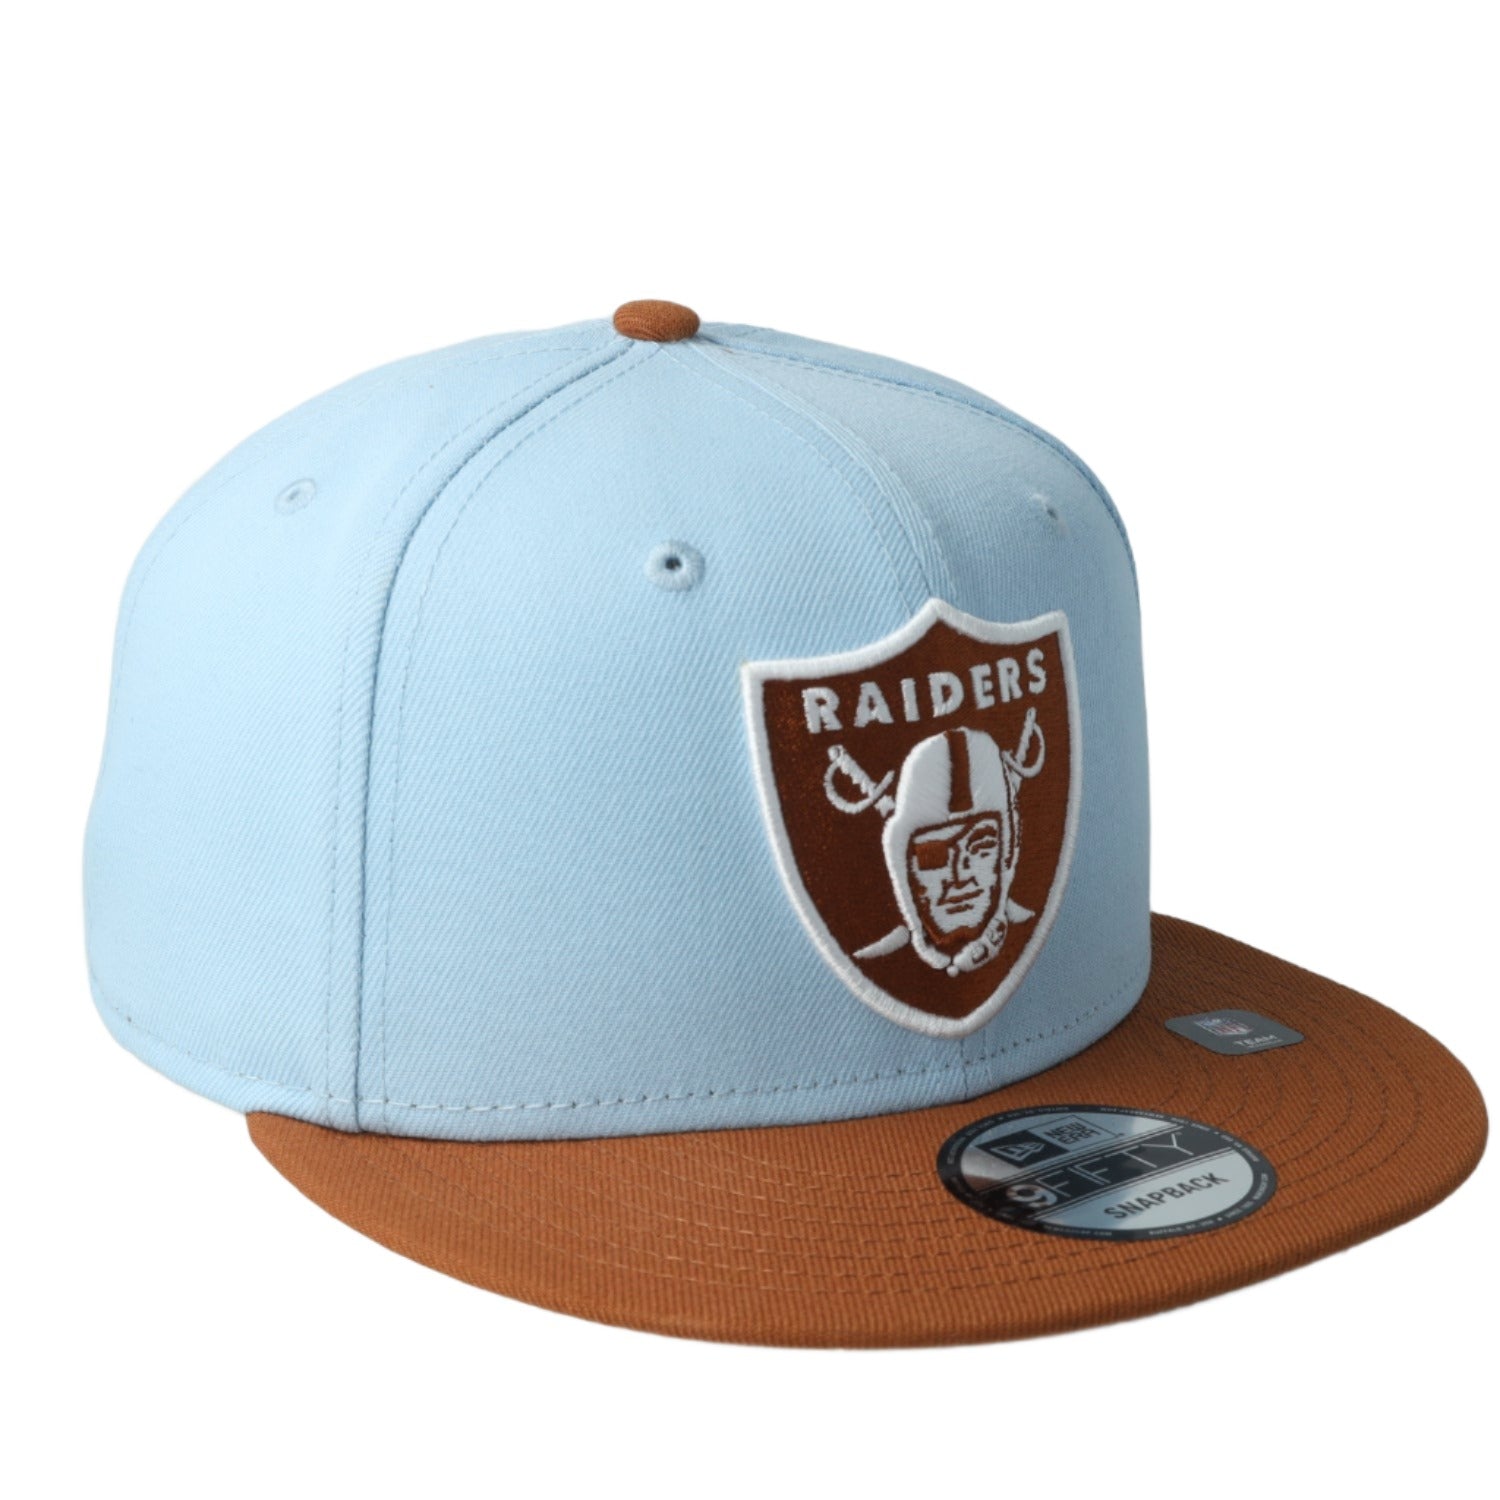 New Era Las Vegas Raiders 2-Tone Color Pack 9FIFTY Snapback Hat -Light Blue/Rust